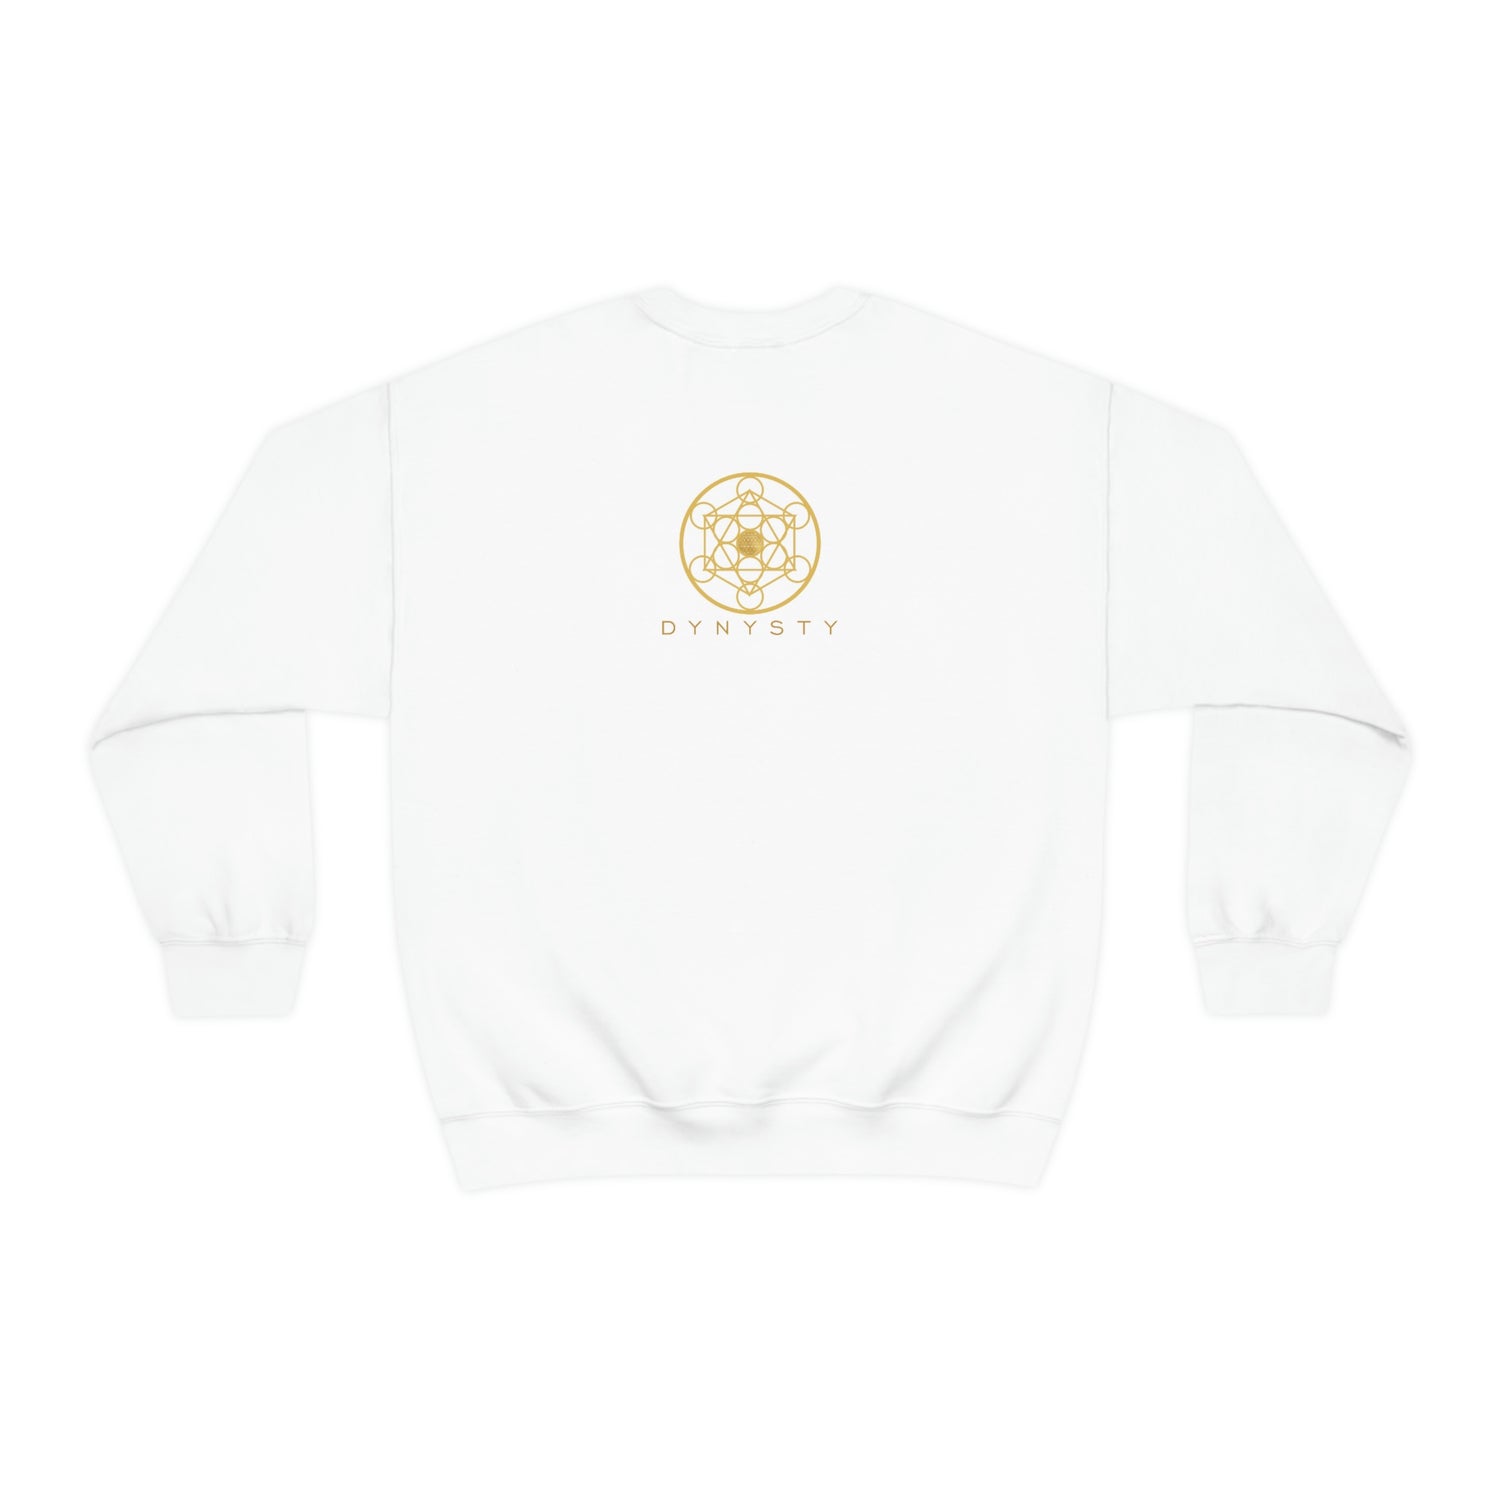 PEACE LOVE LIGHT INSIGHT - Unisex Heavy Blend™ Crewneck Sweatshirt